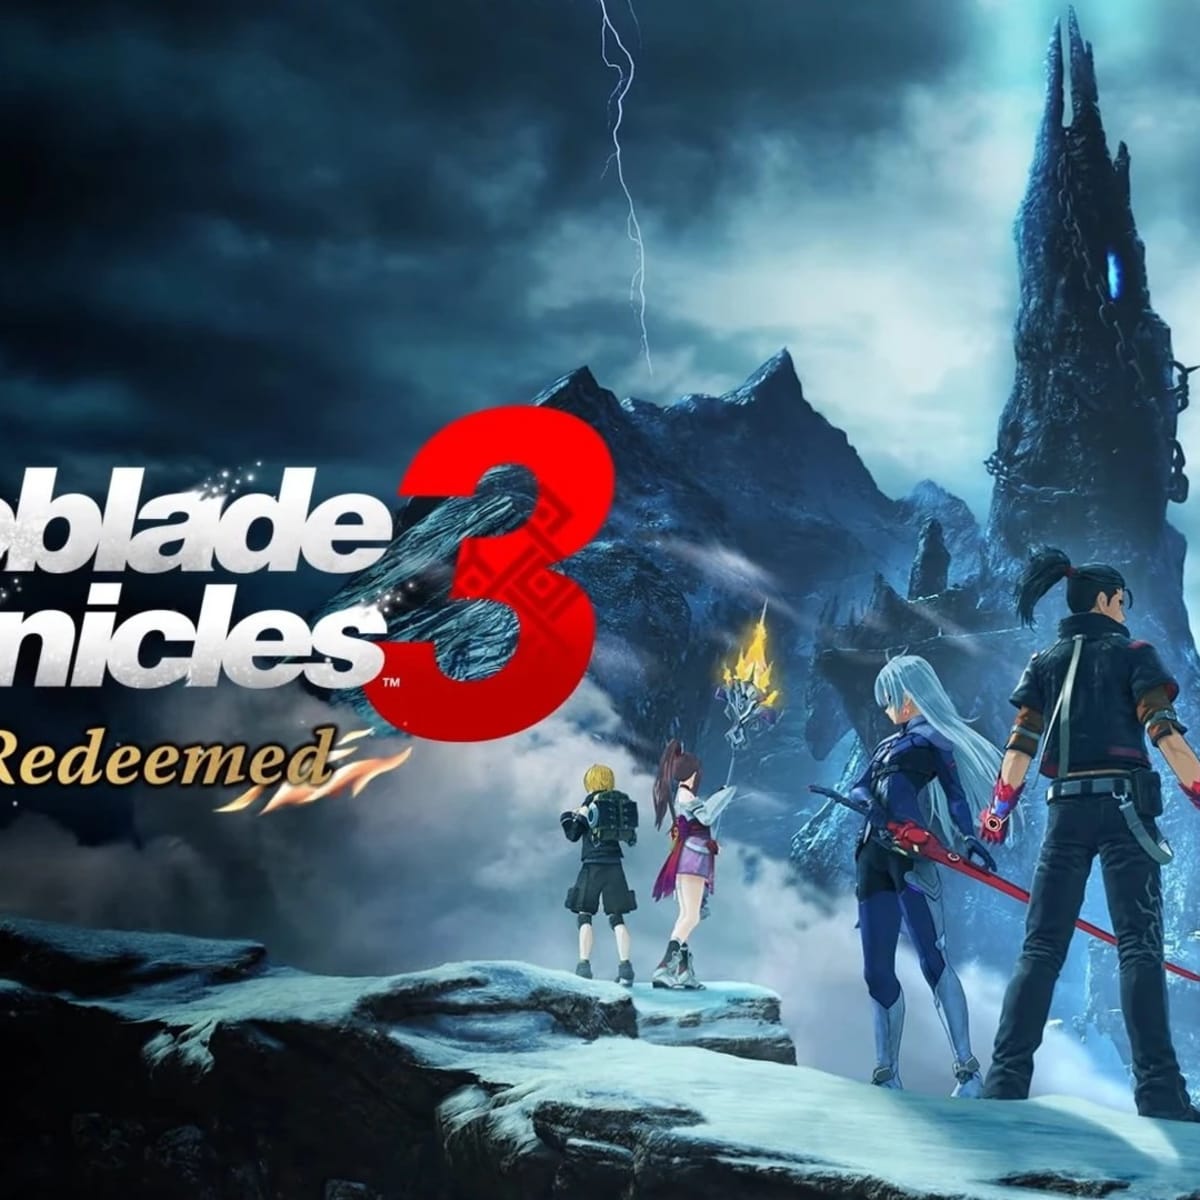 Xenoblade Chronicles 3: Future Redeemed Launching Next Week - RPGamer